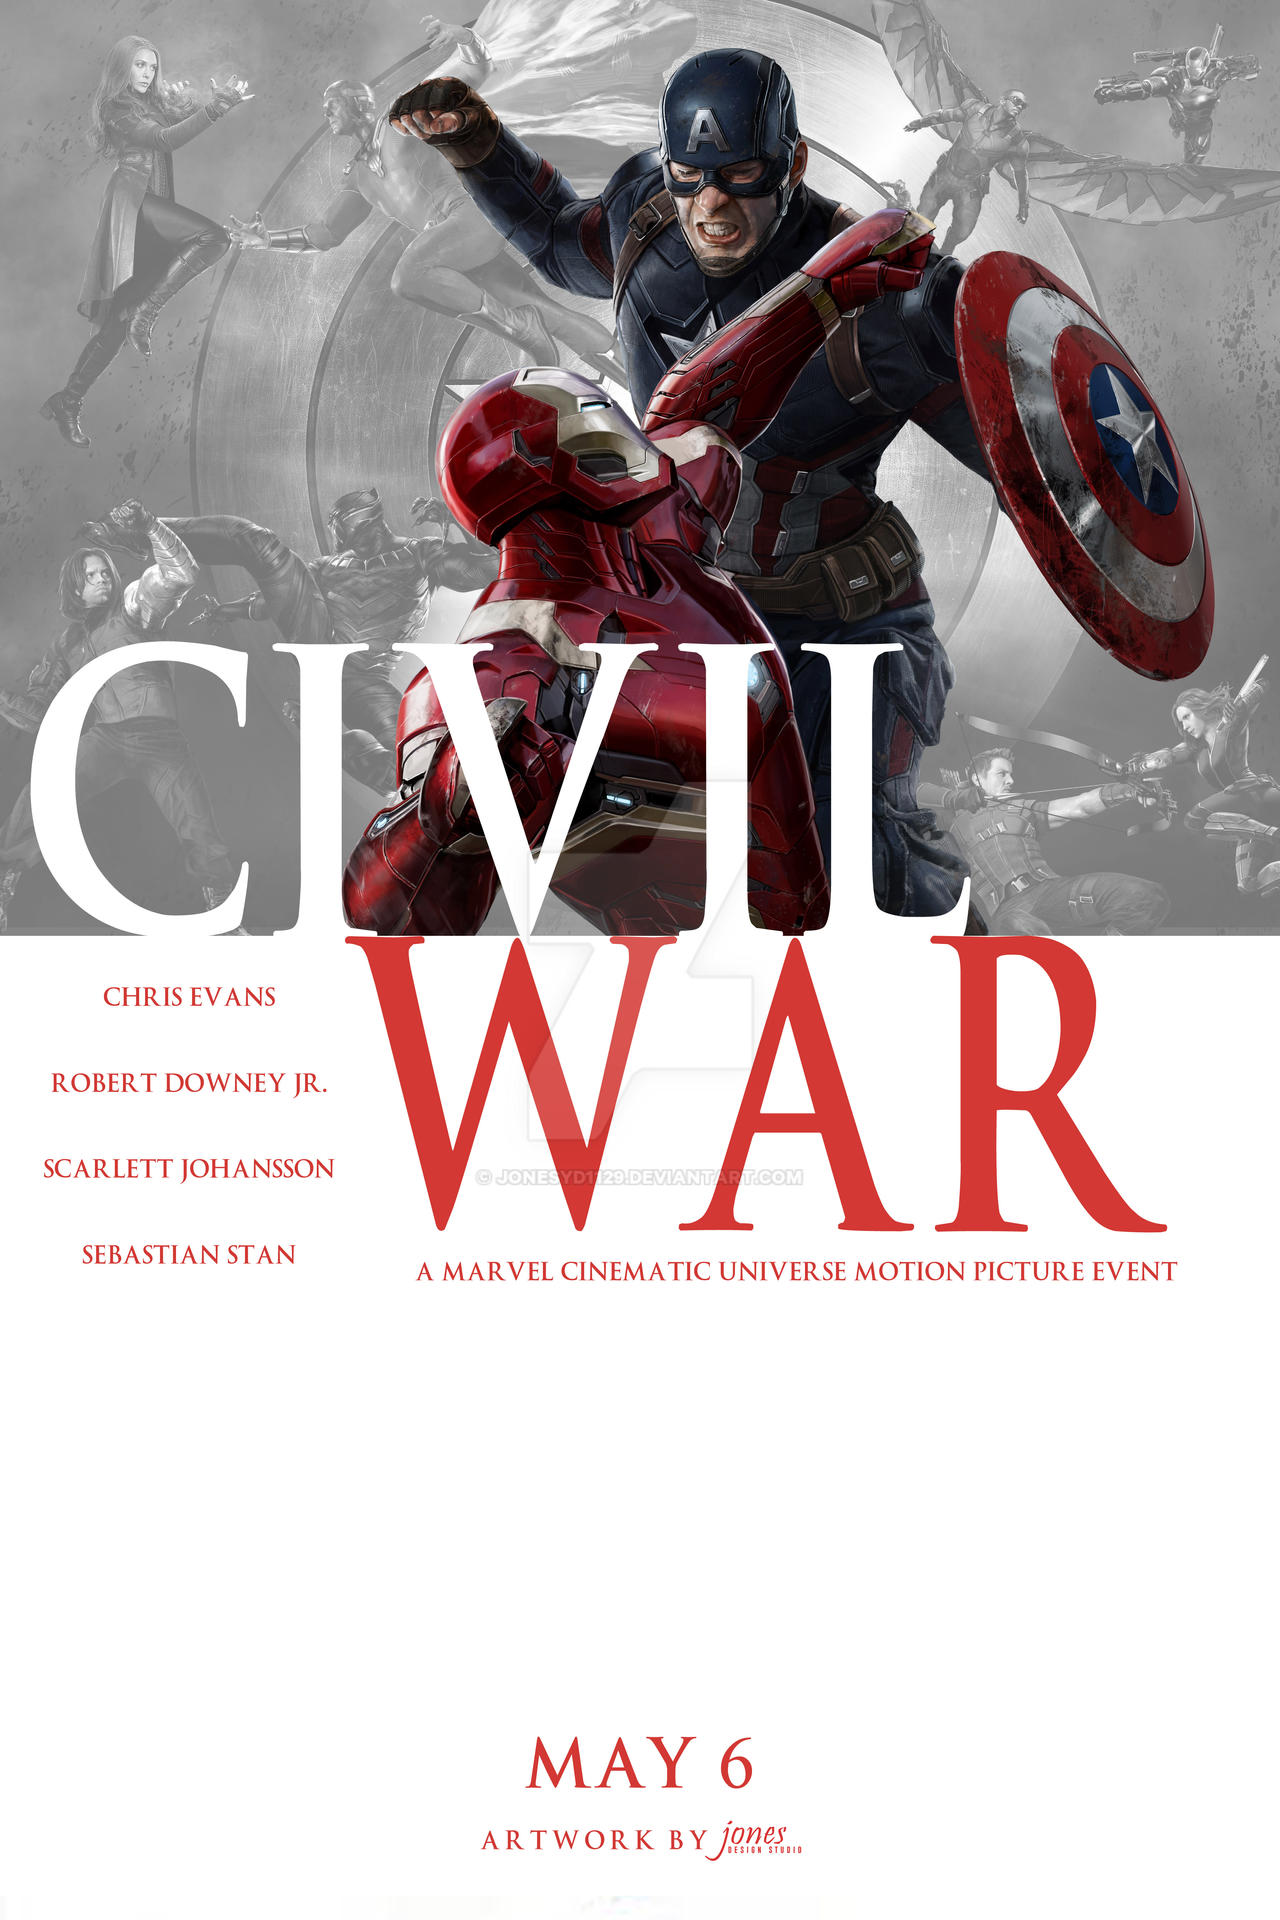 Captain America: Civil War (Comic Cover Style) by jonesyd1129 on DeviantArt